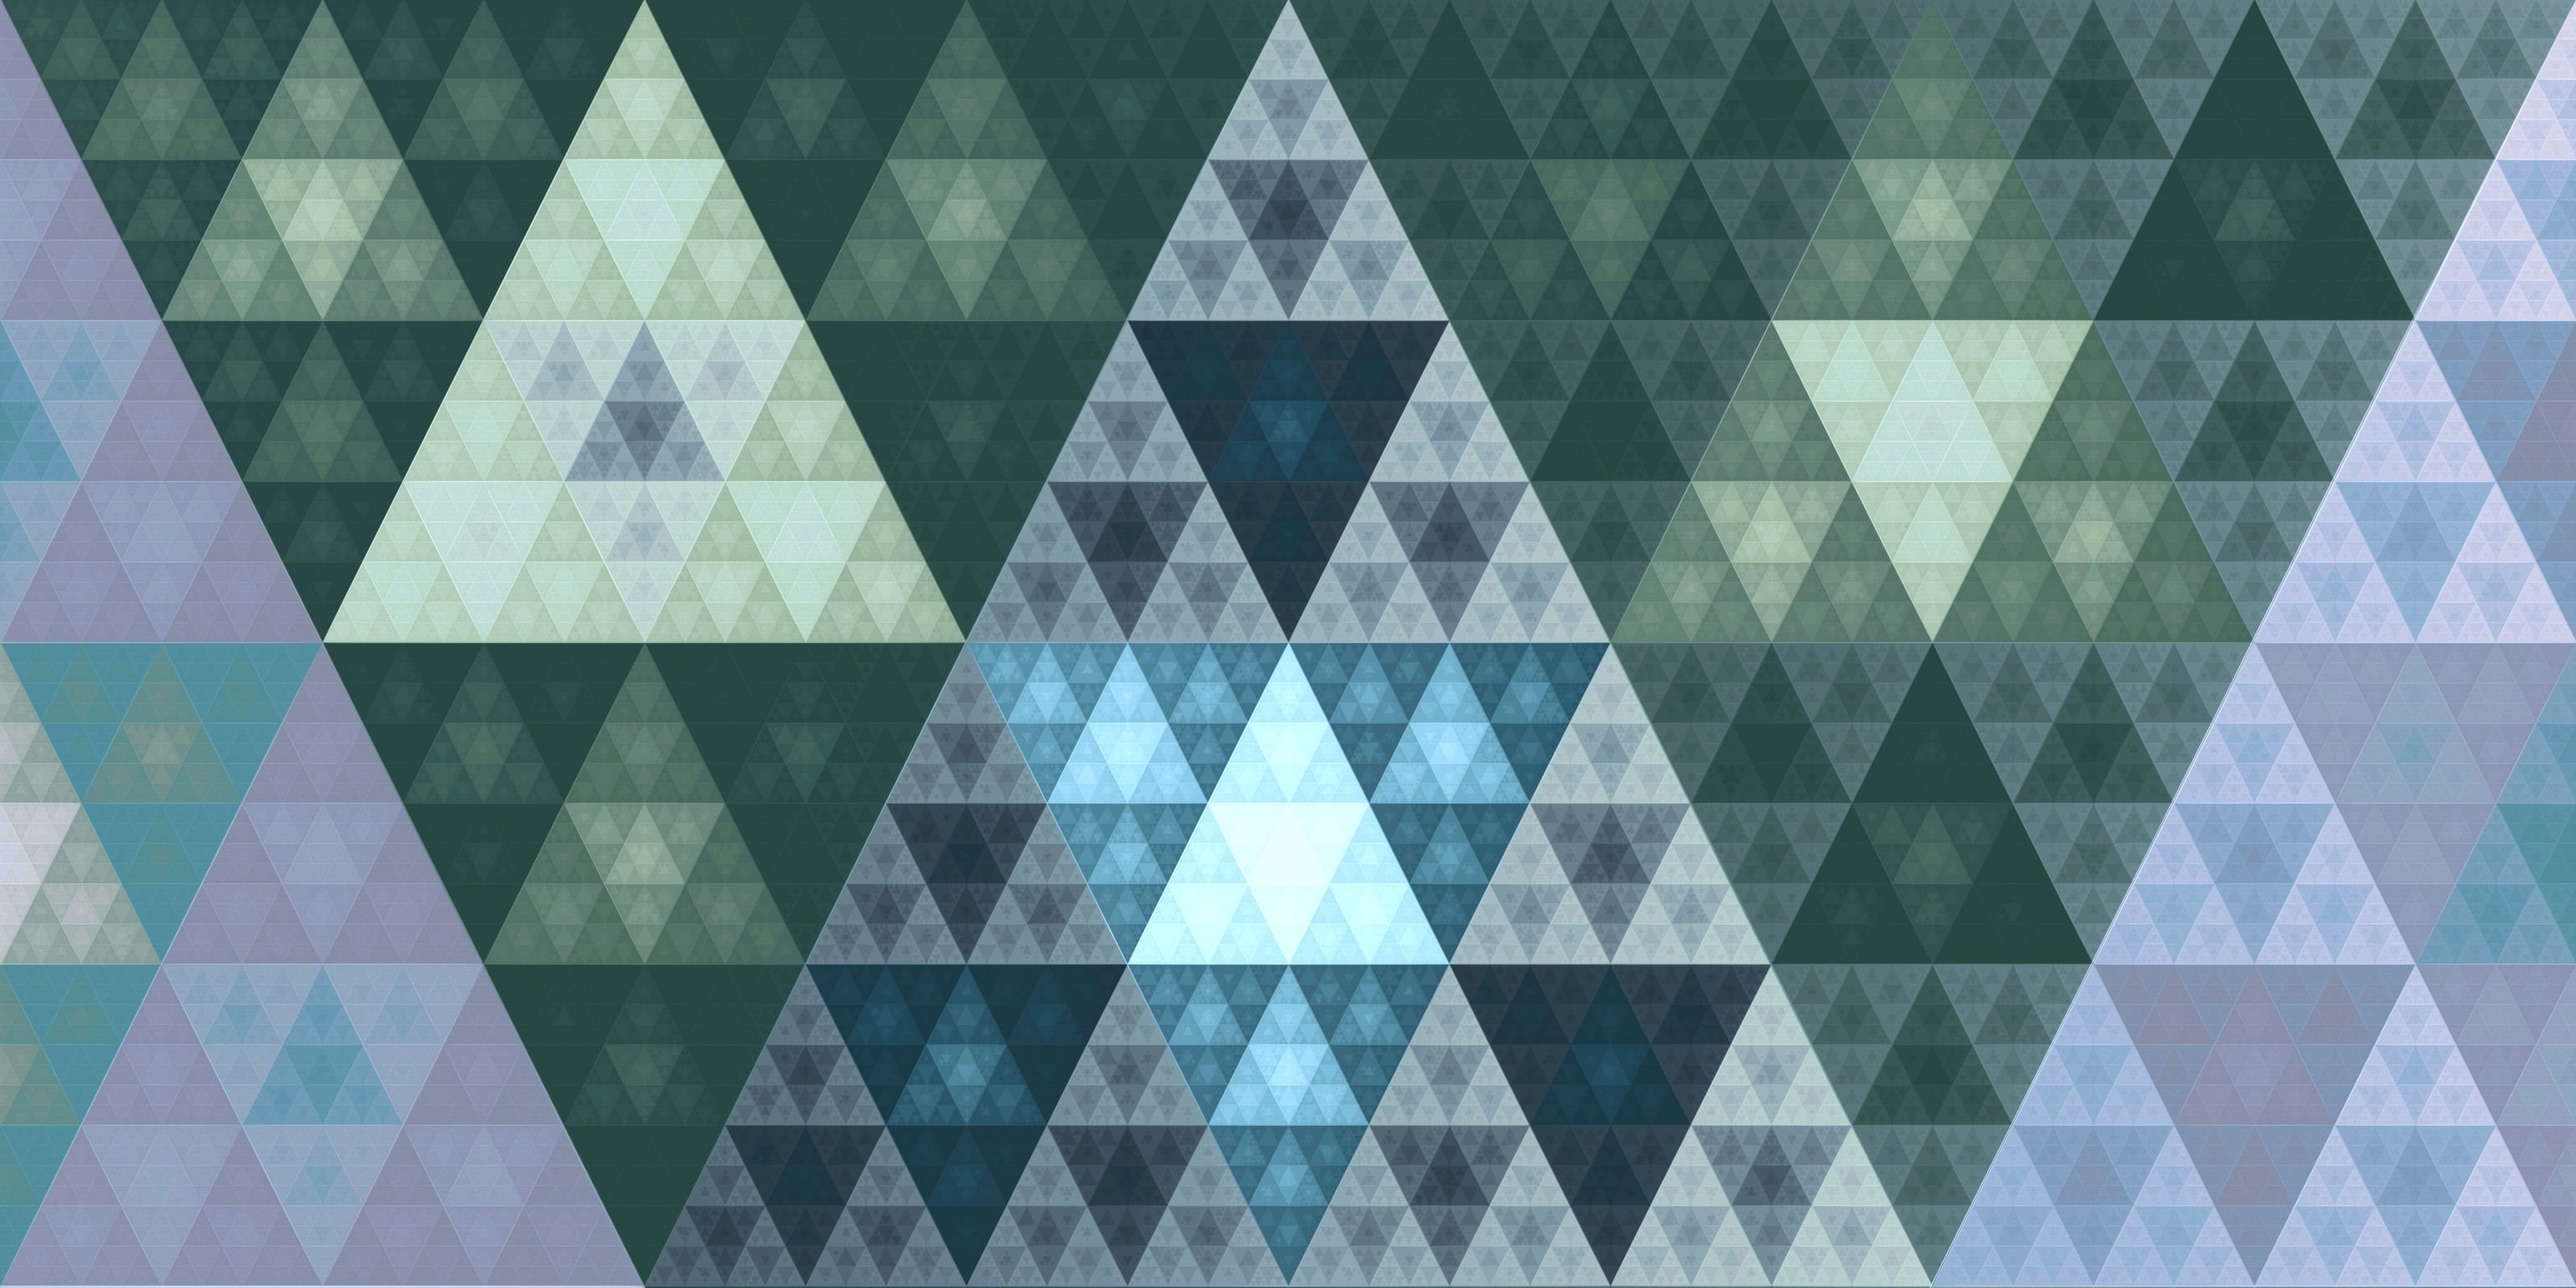 green and white argyle area rug, fractal, Apophysis, golden ratio, Fibonacci sequence